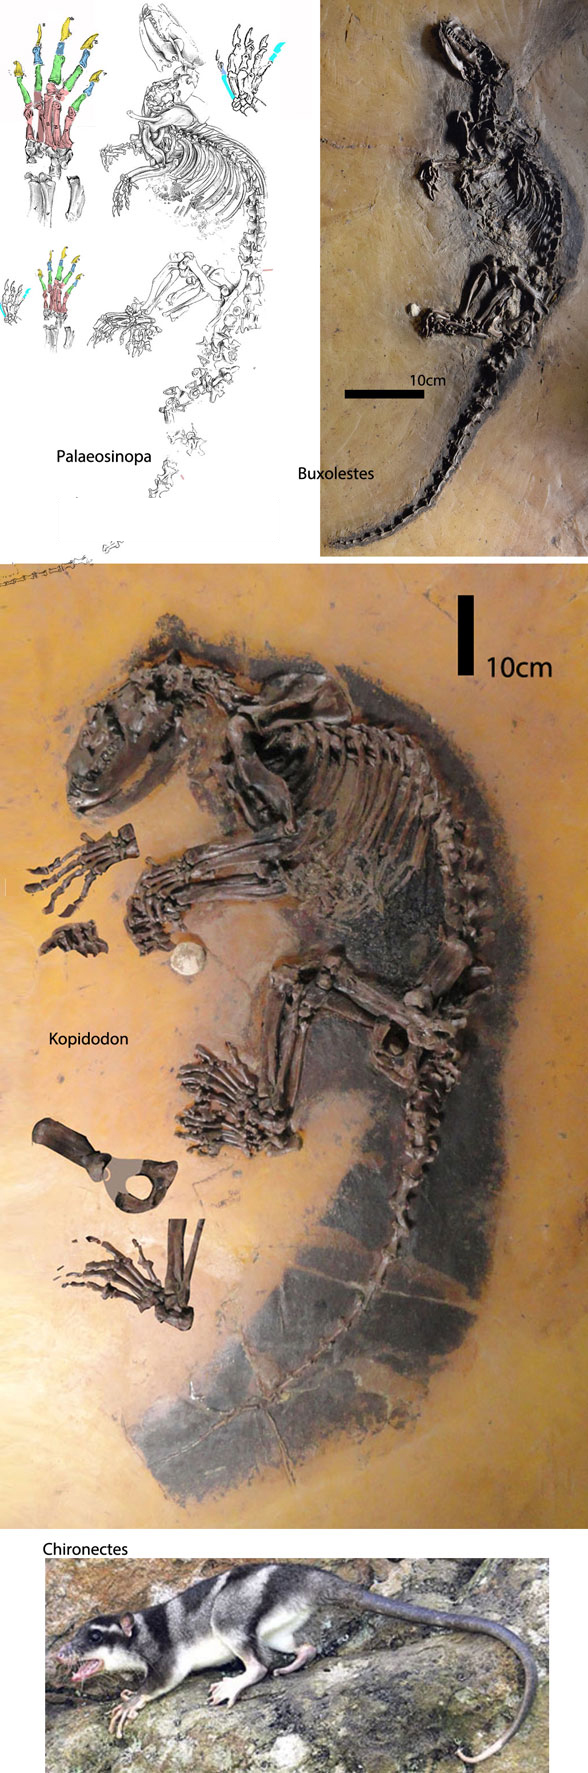 water opossums to scale Chironectes, Kopidodon, Palaeosinopa